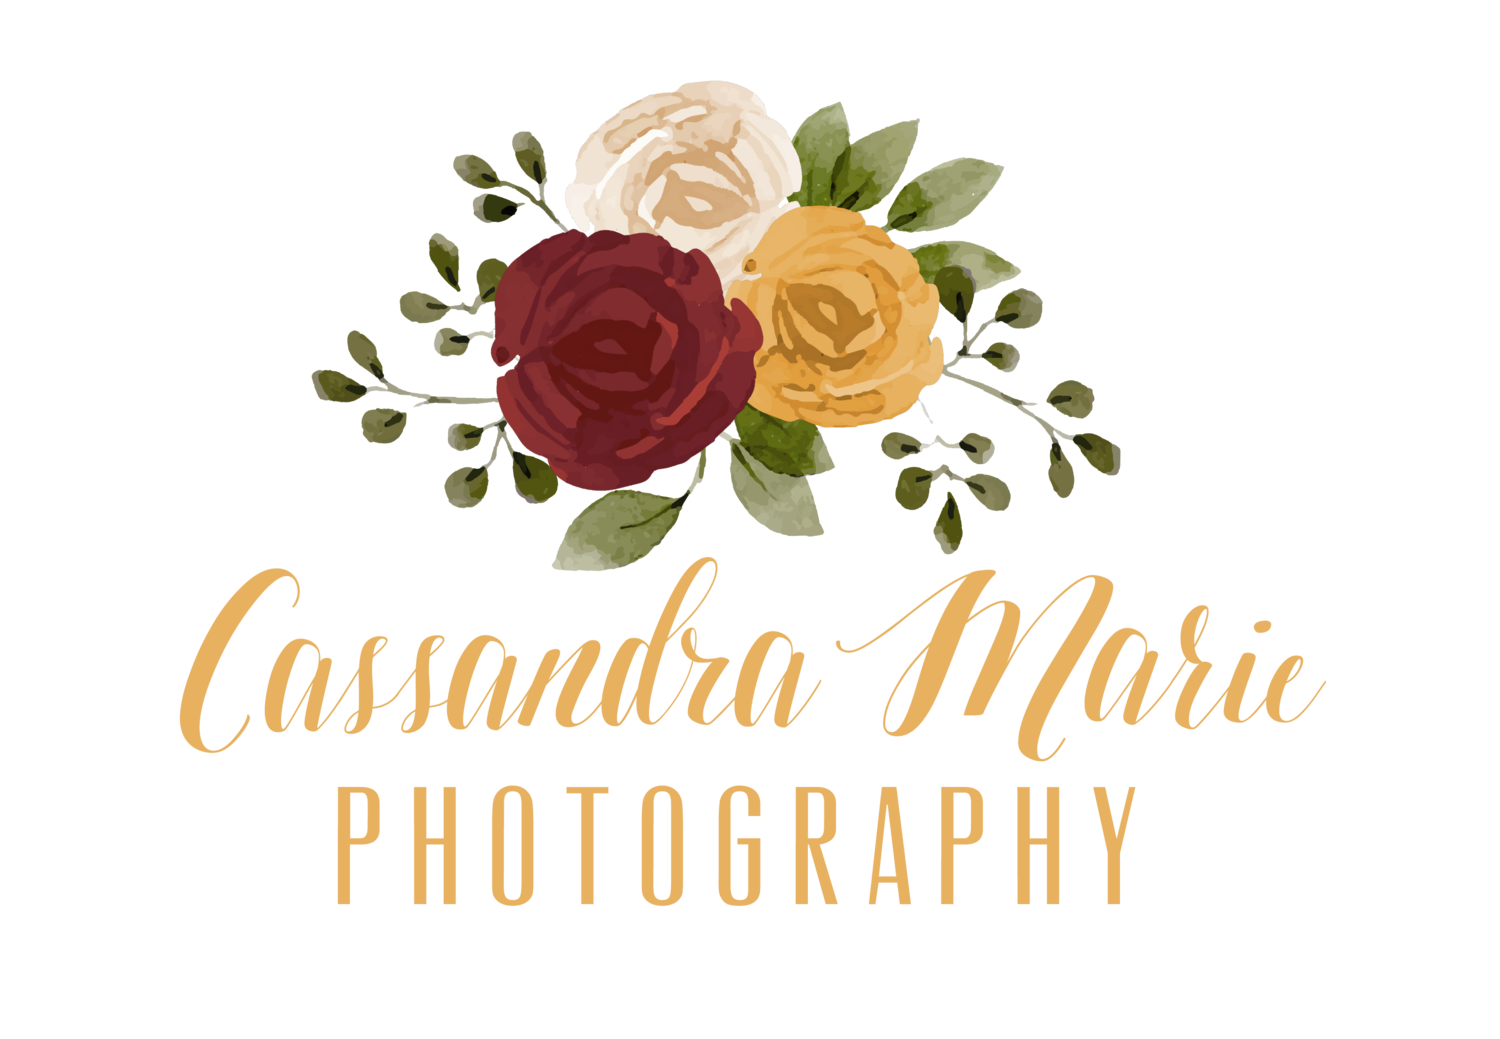 Cassandra Marie Photography